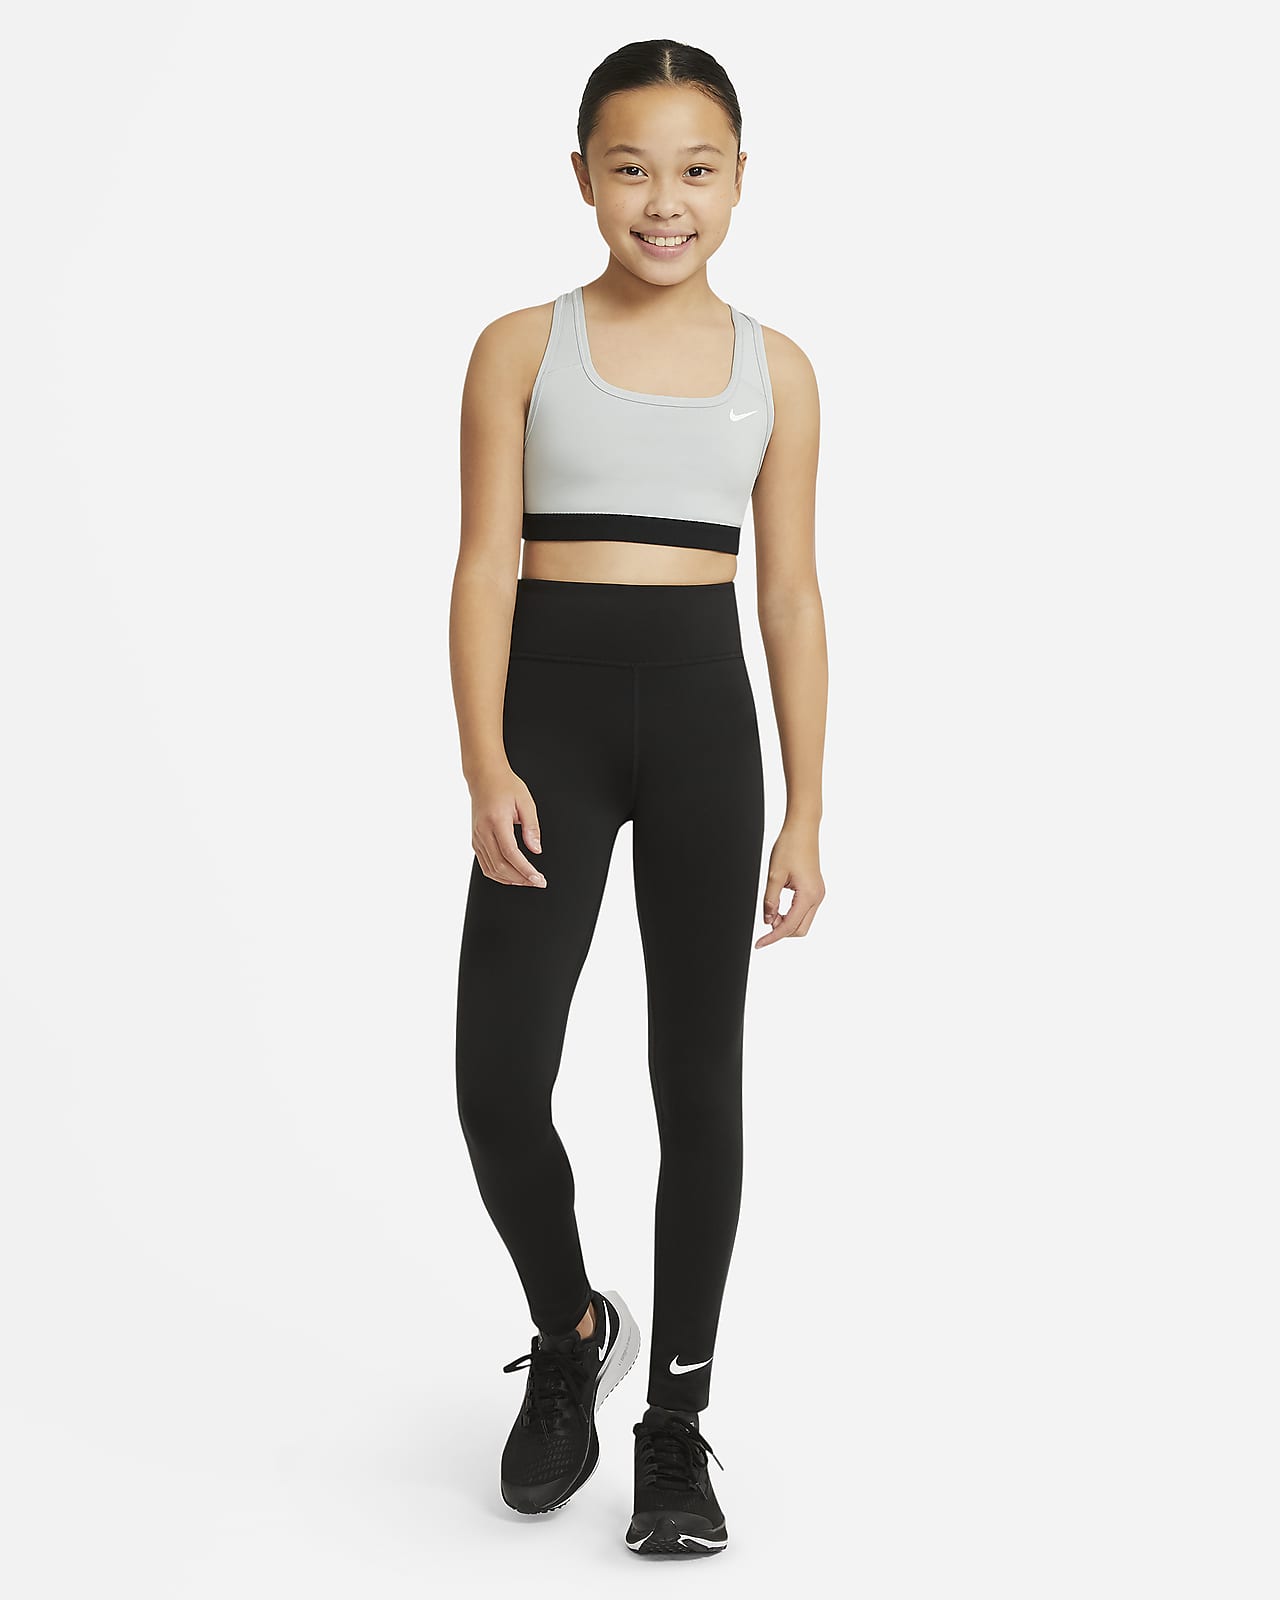 Nike XL kids sports bra, fits up to a size 8. Worn - Depop